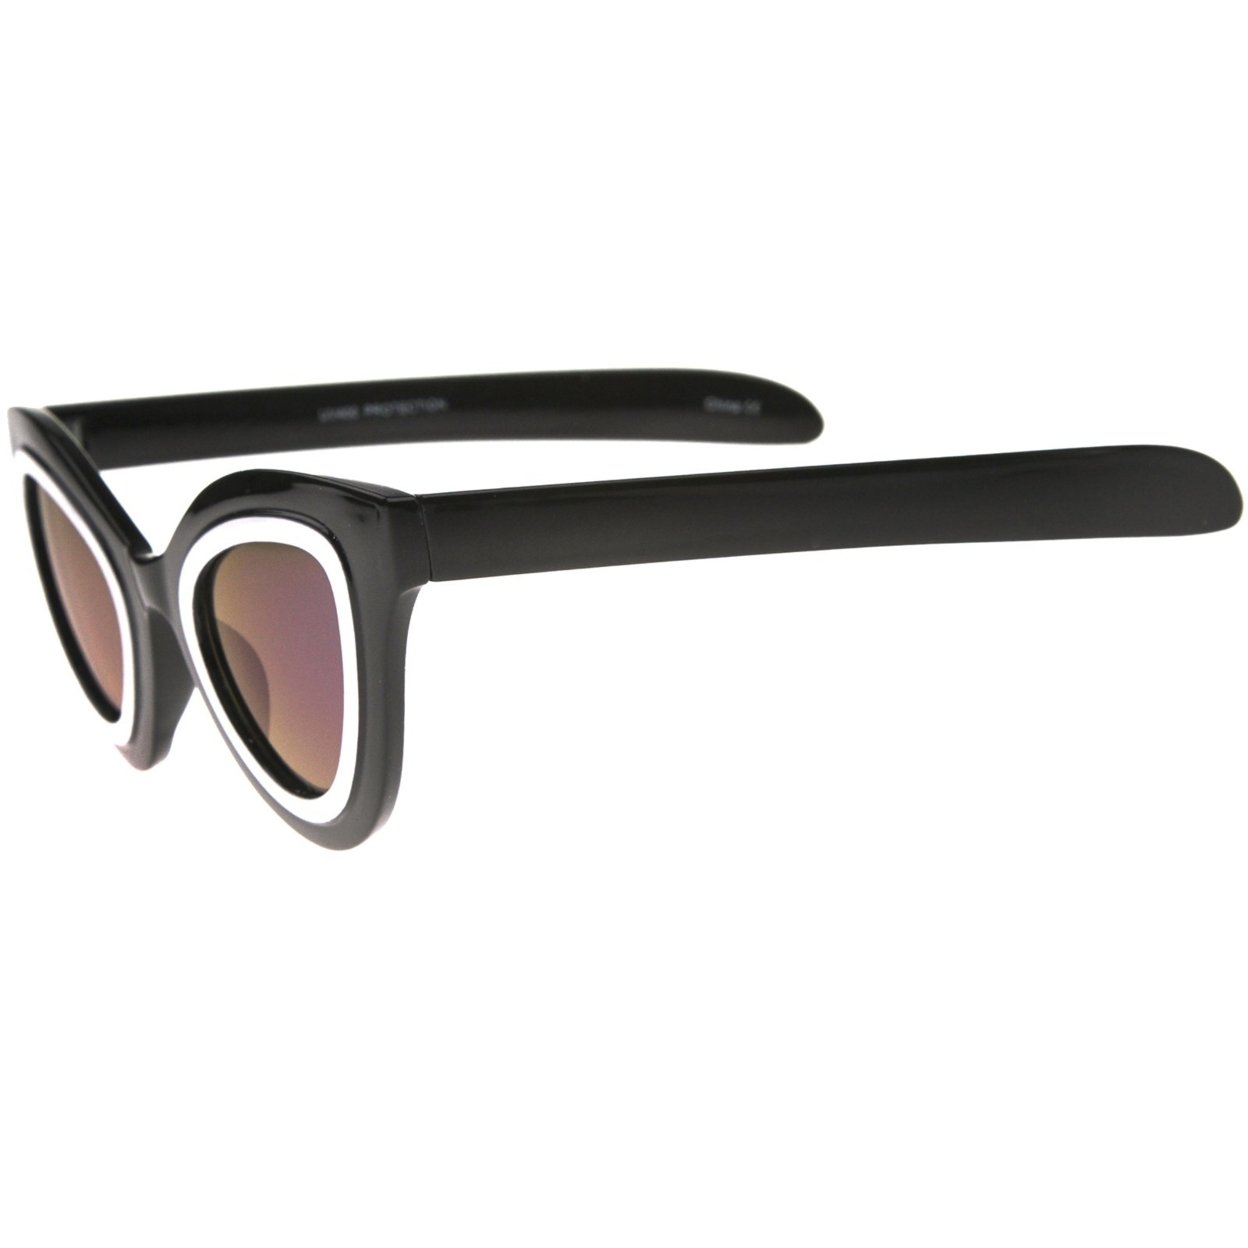 Womens High Fashion Two-Toned Mirrored Cat Eye Sunglasses 42mm - Shiny Black-White / Blue Mirror